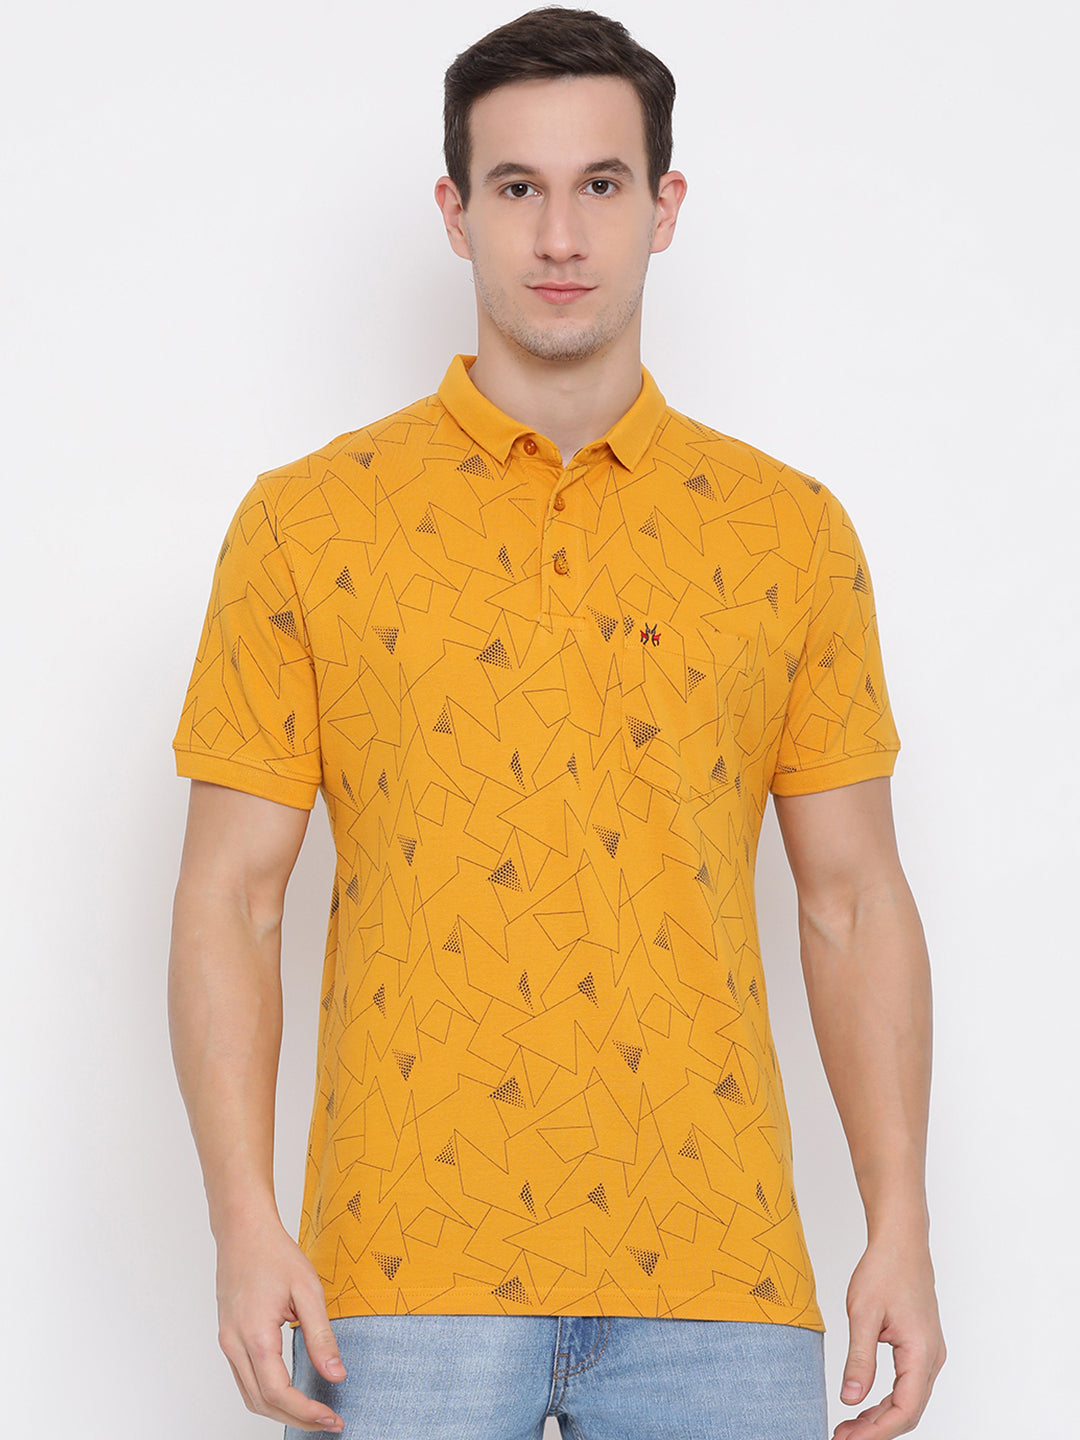 Mustard Printed T-shirt - Men T-Shirts